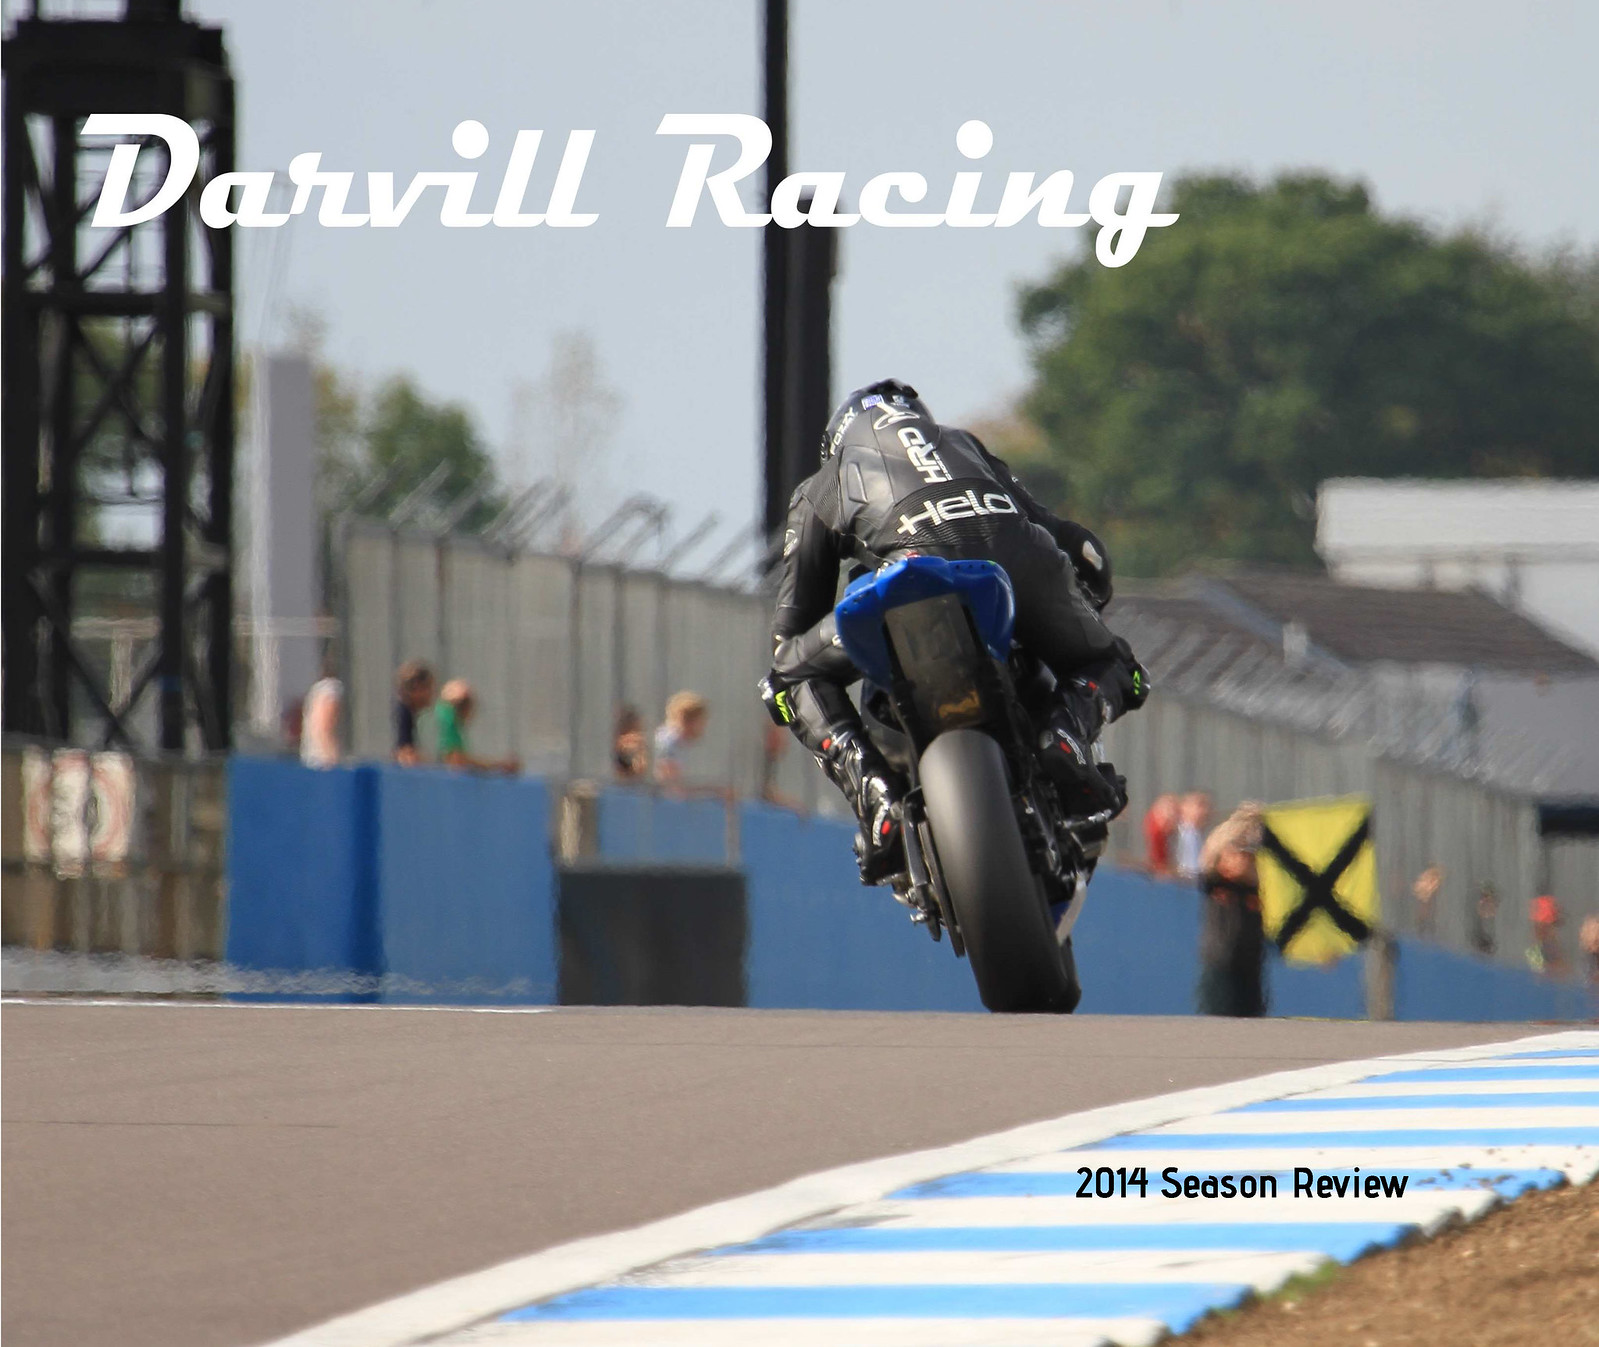 2014 Darvill Racing Season Review